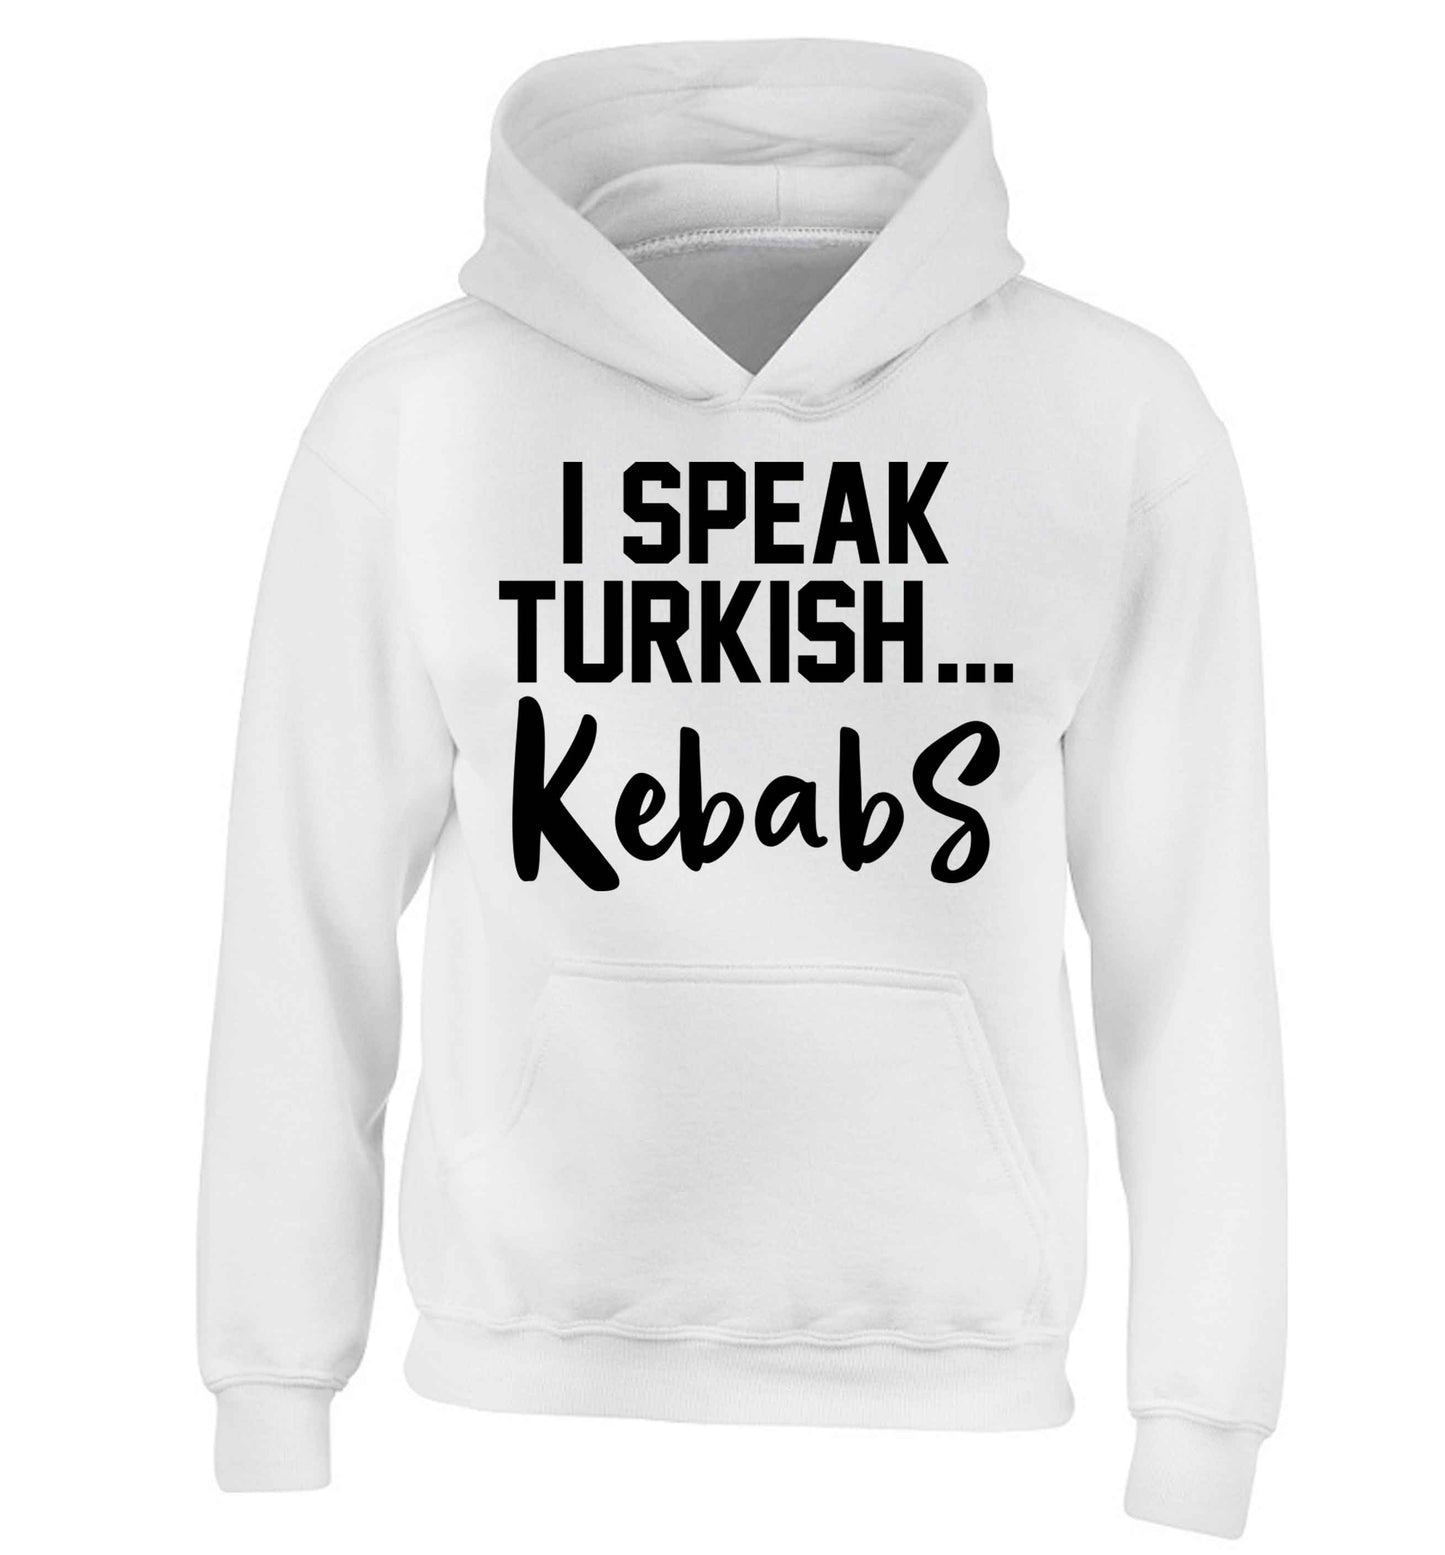 I speak Turkish...kebabs children's white hoodie 12-13 Years